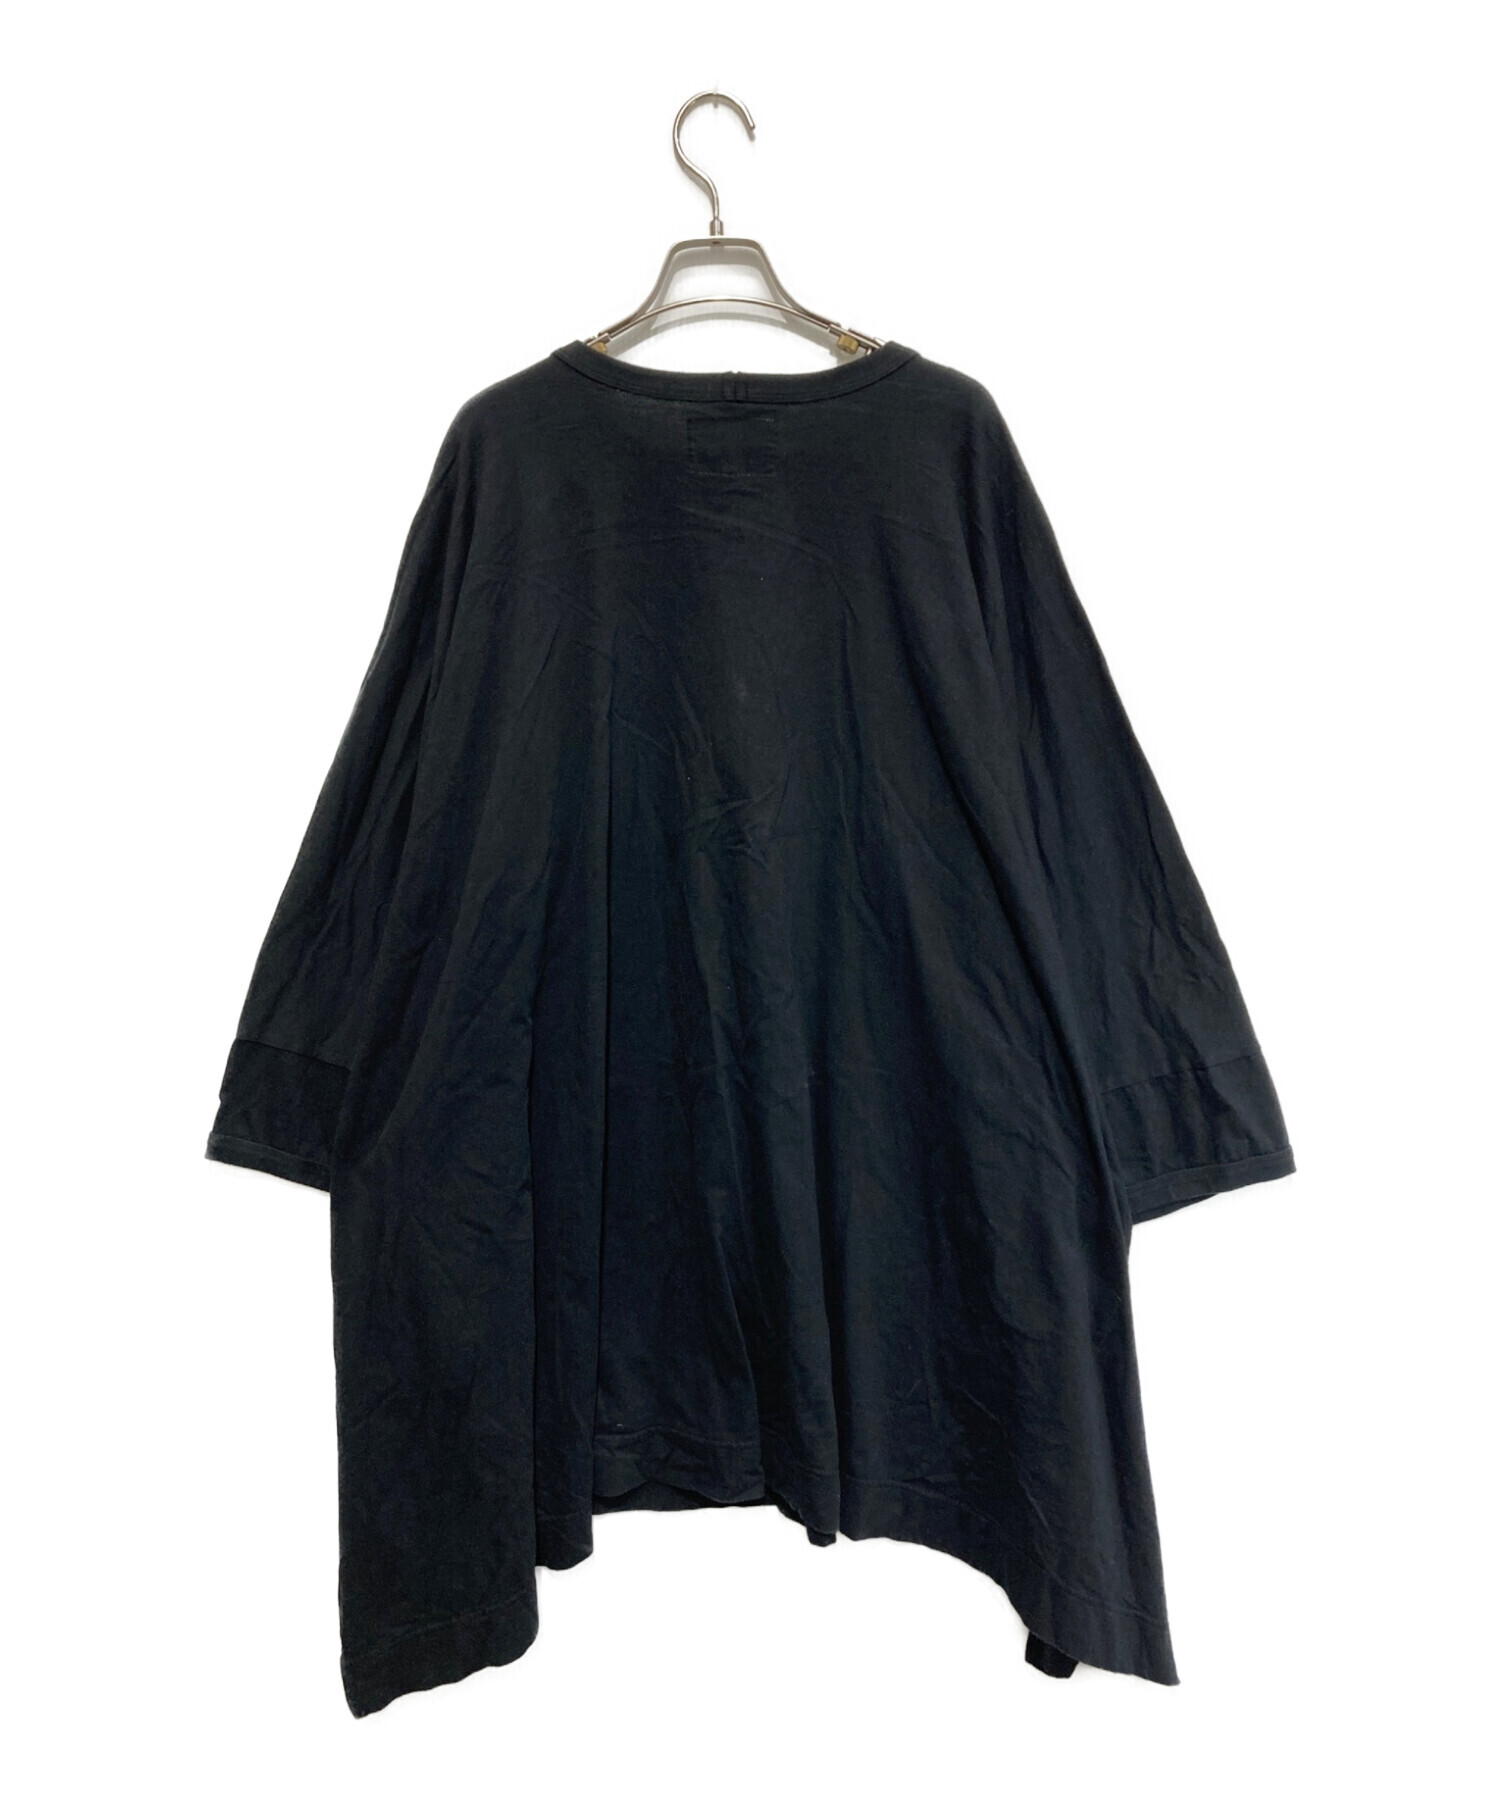 Vivienne Westwood ANGLOMANIA (ヴィヴィアンウエストウッド アングロマニア) オーバーサイズプリントTシャツ ブラック  サイズ:SIZE 38